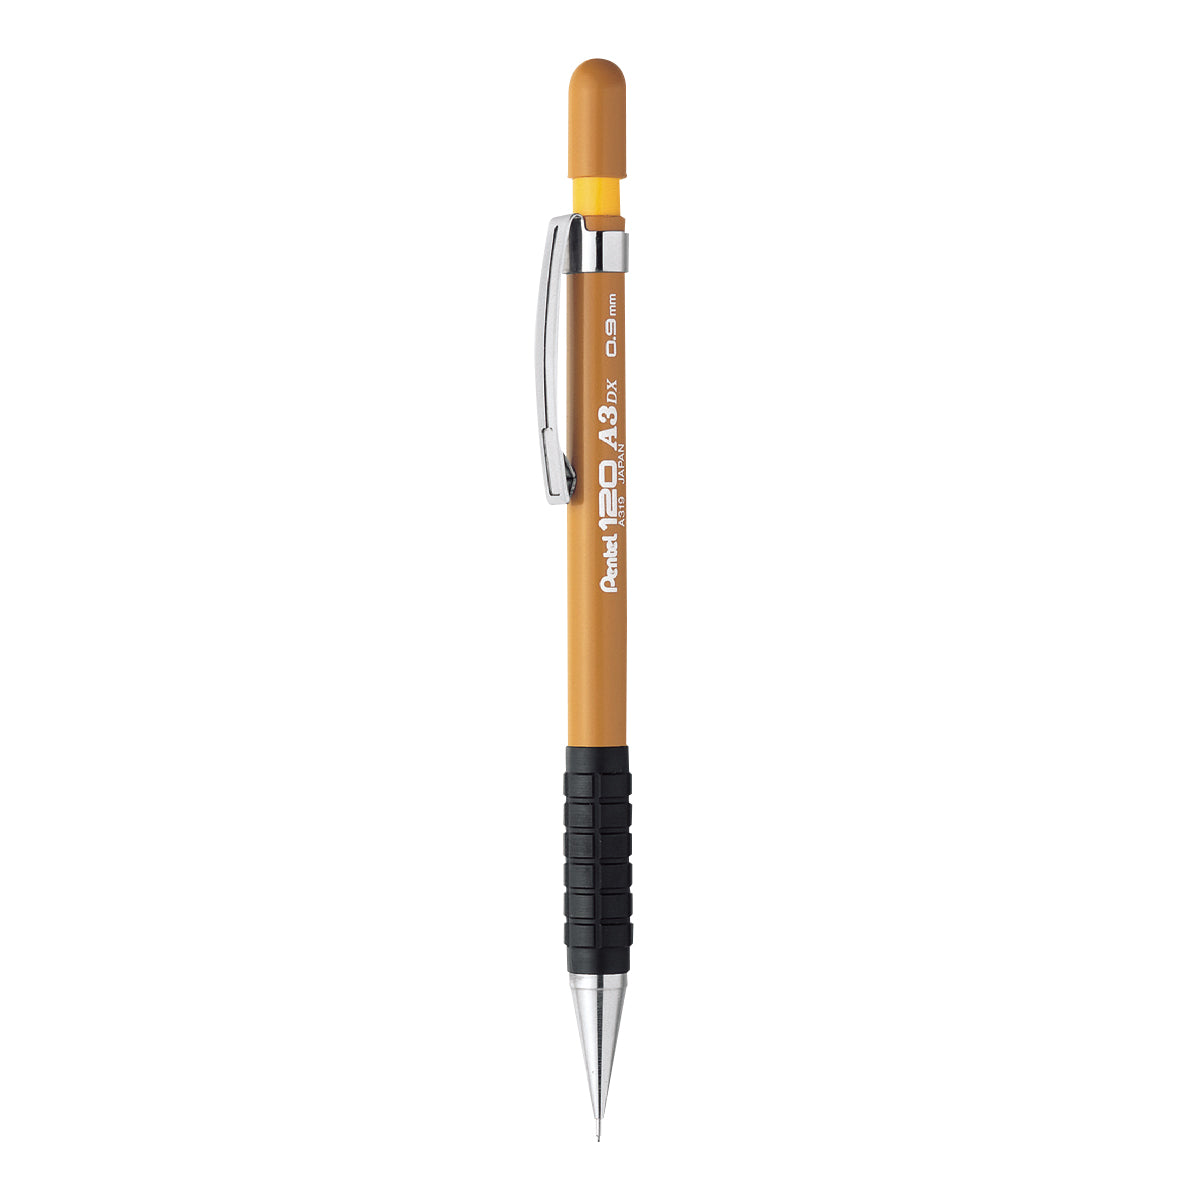 Shop Pentel Mechanical Pencil A3 online in UAE